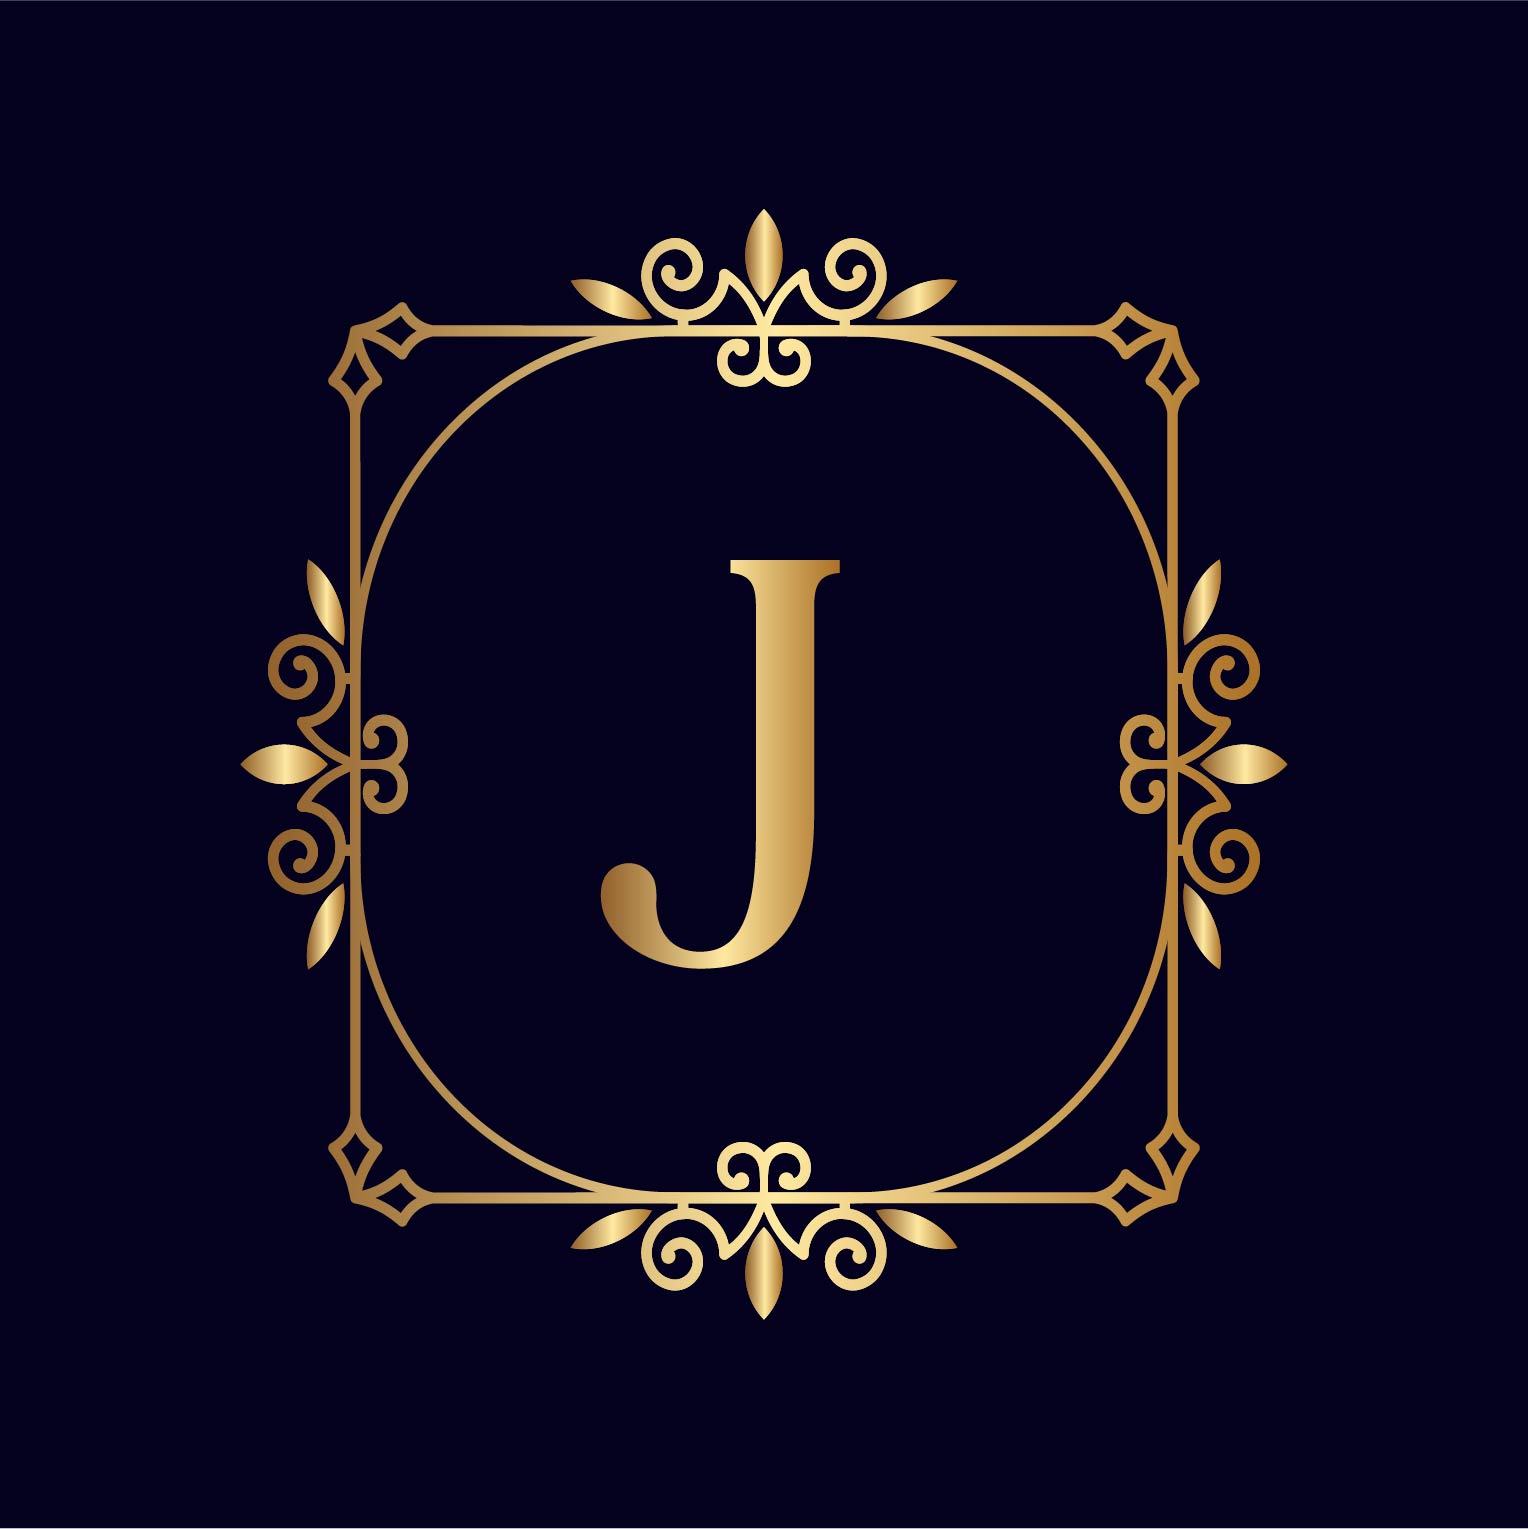 Artistic Gold Letter J Logos Design preview image.